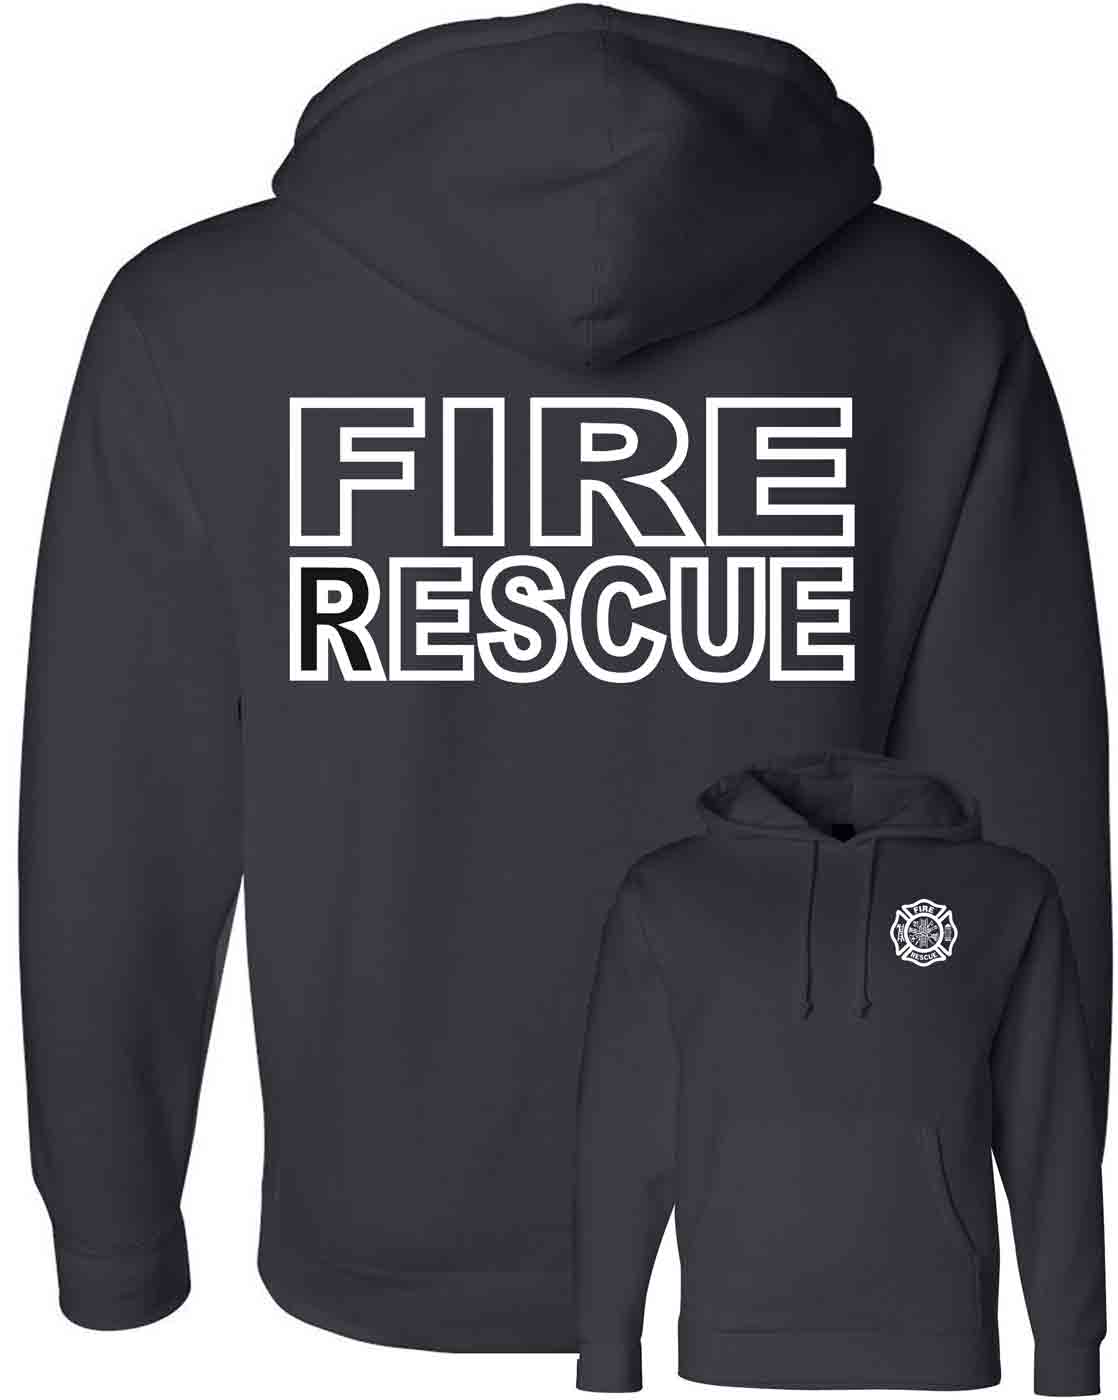 fire-rescue-hoodie-navy-independent.jpg